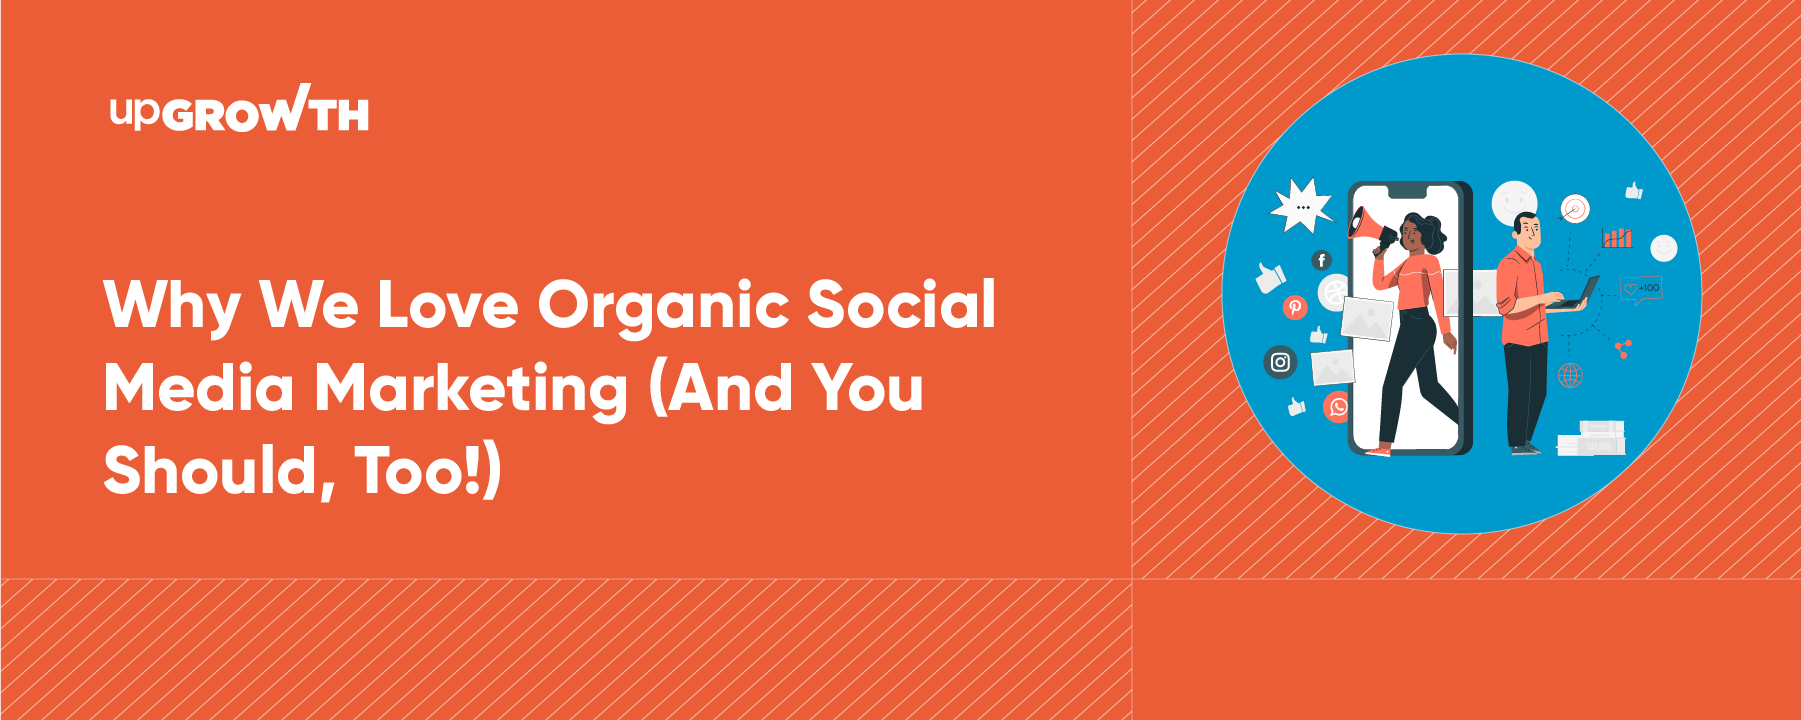 Why We Love Organic Social Media Marketing